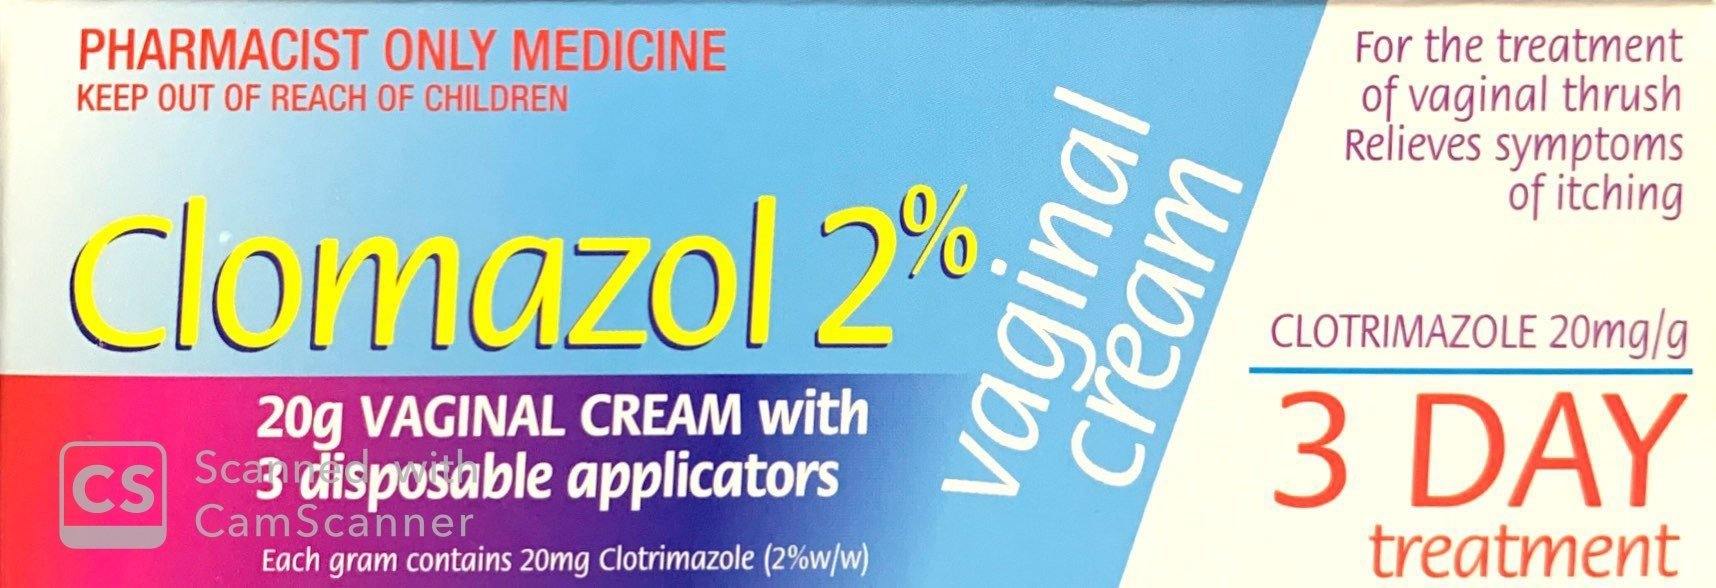 Clomazol 2% Vaginal Cream For Treatment Of Vaginal Thrush 20g - Pharmacist Only Medicine